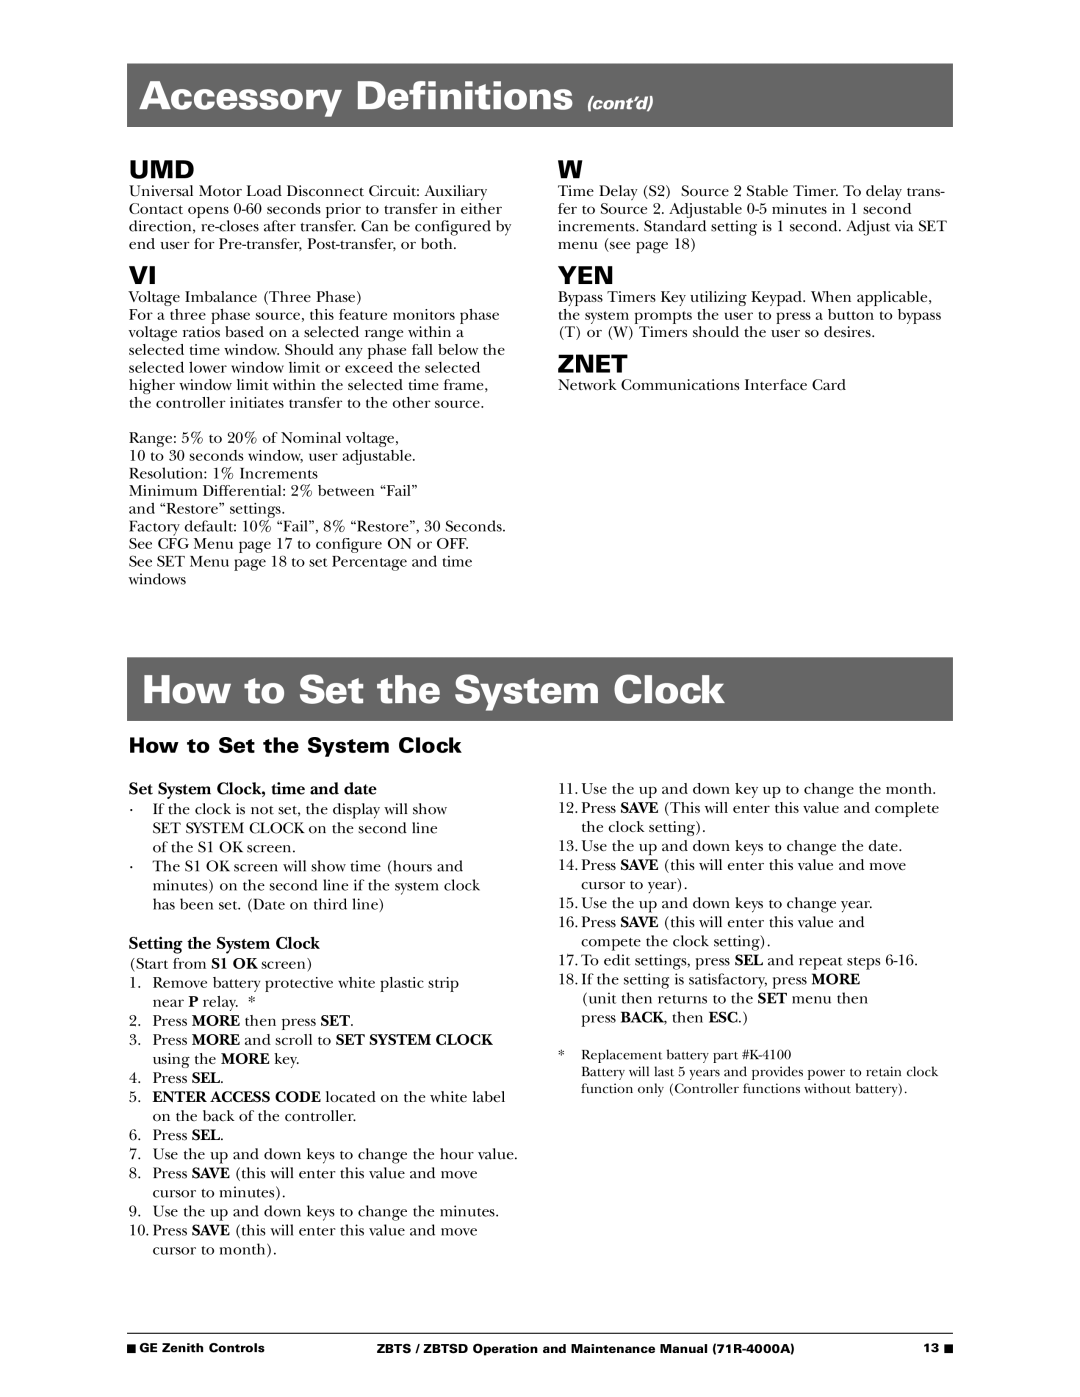 GE ZBTSD manual How to Set the System Clock, Umd 